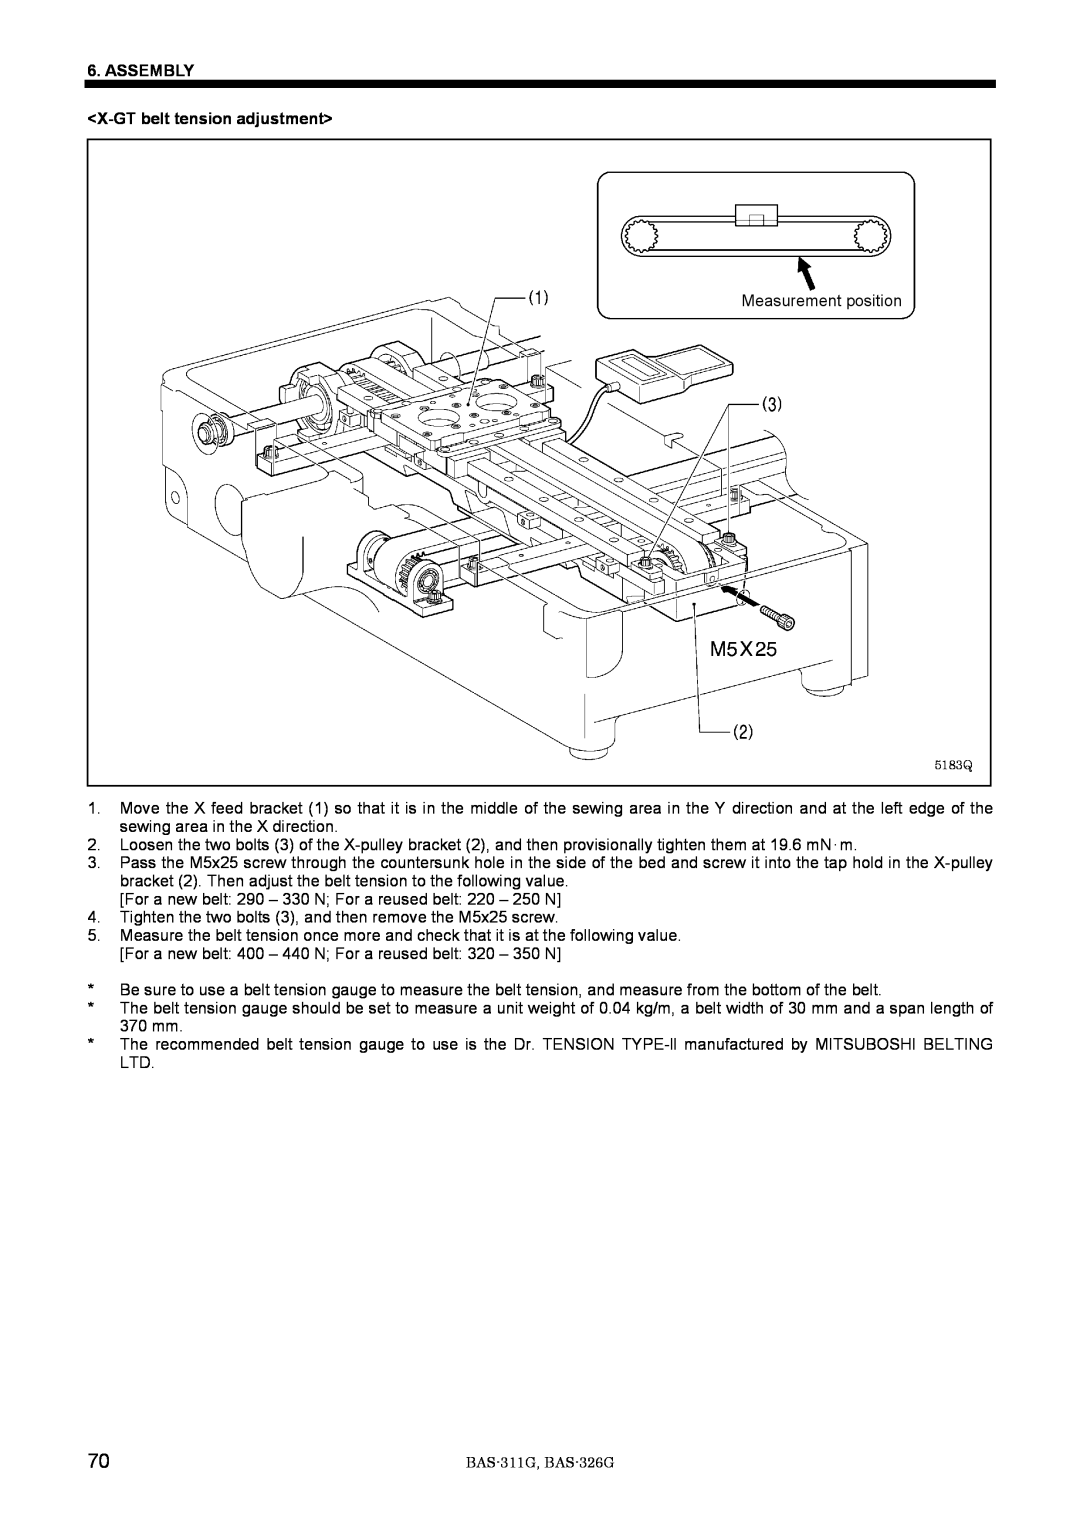 Brother BAS-311G service manual Assembly, X-GT belt tension adjustment, Measurement position 